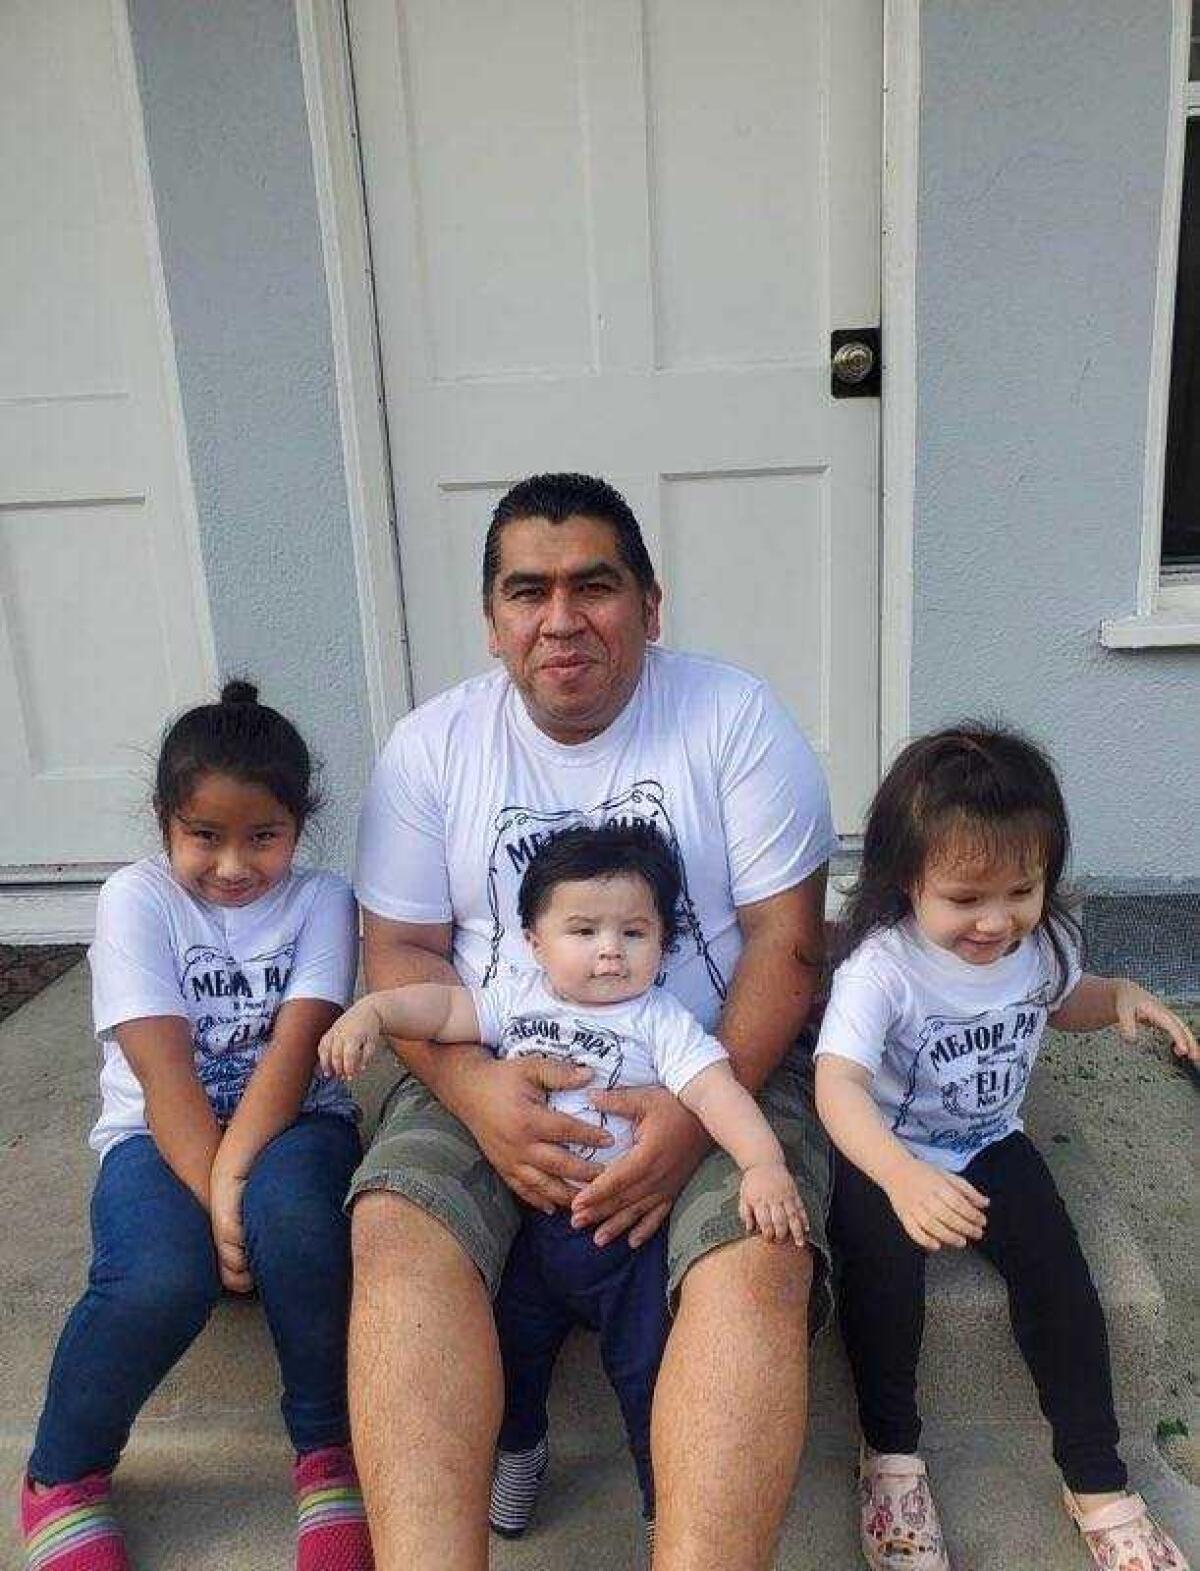 Luis Hernandez poses with his three children